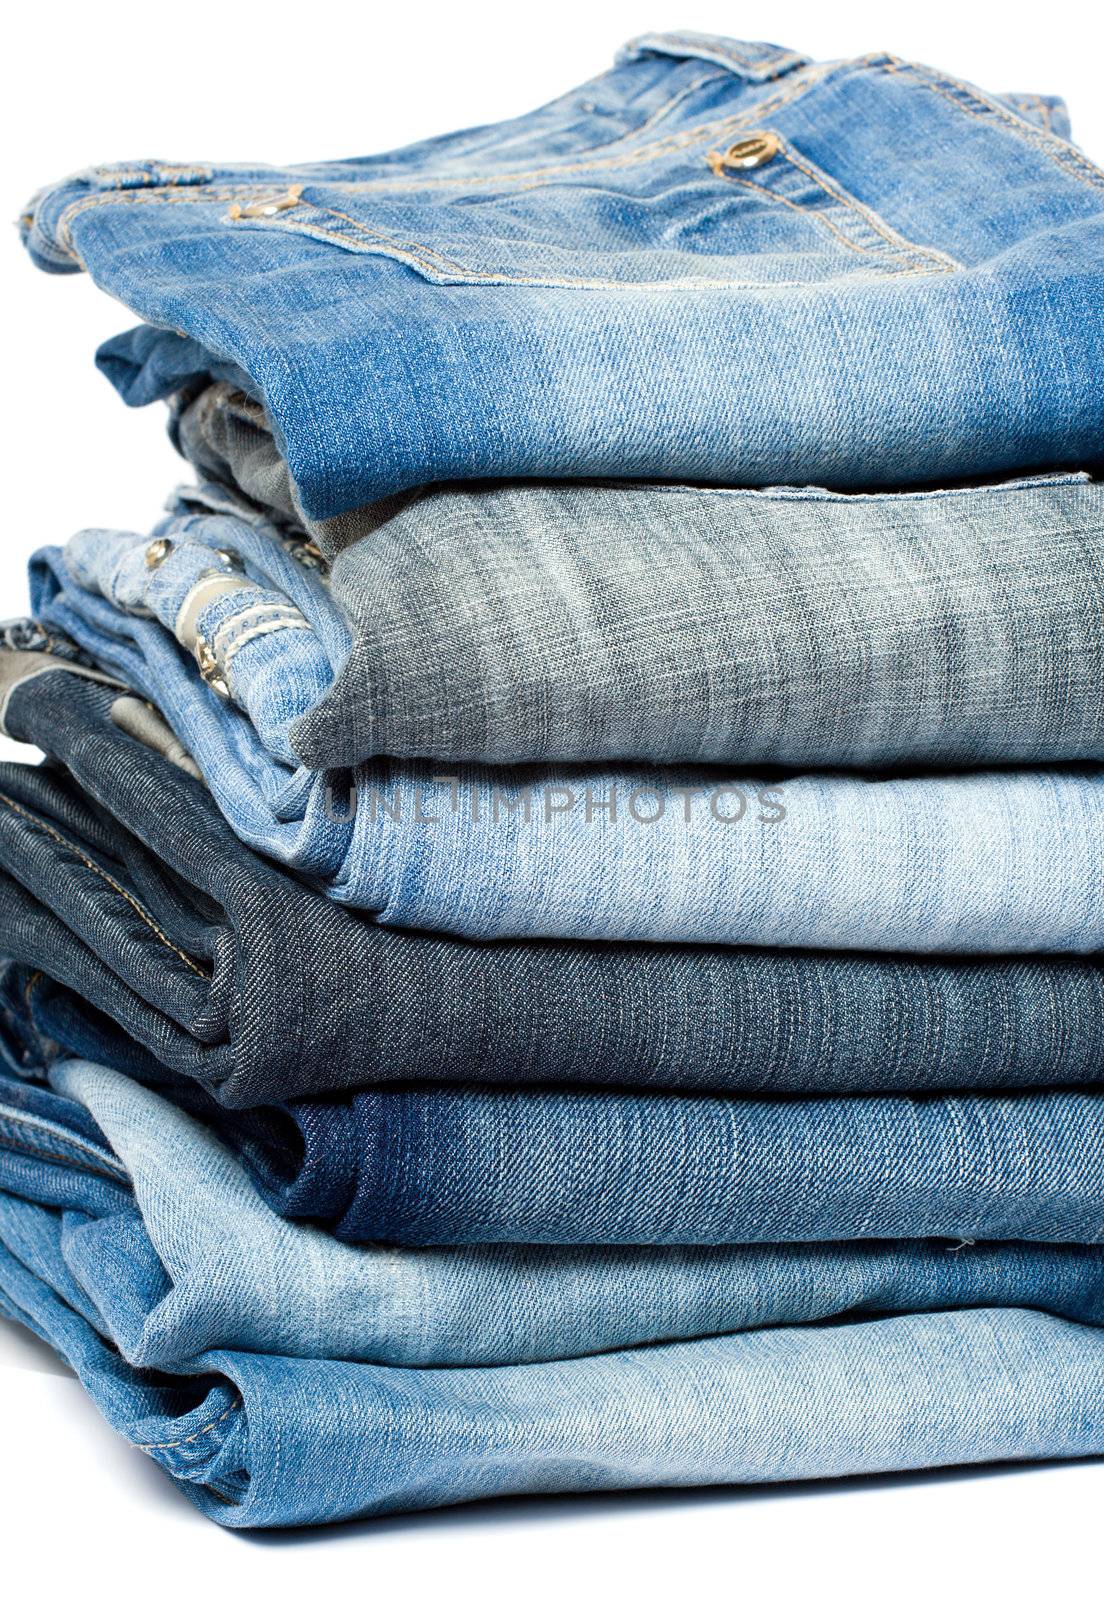 Blue denim jeans. by Bedolaga